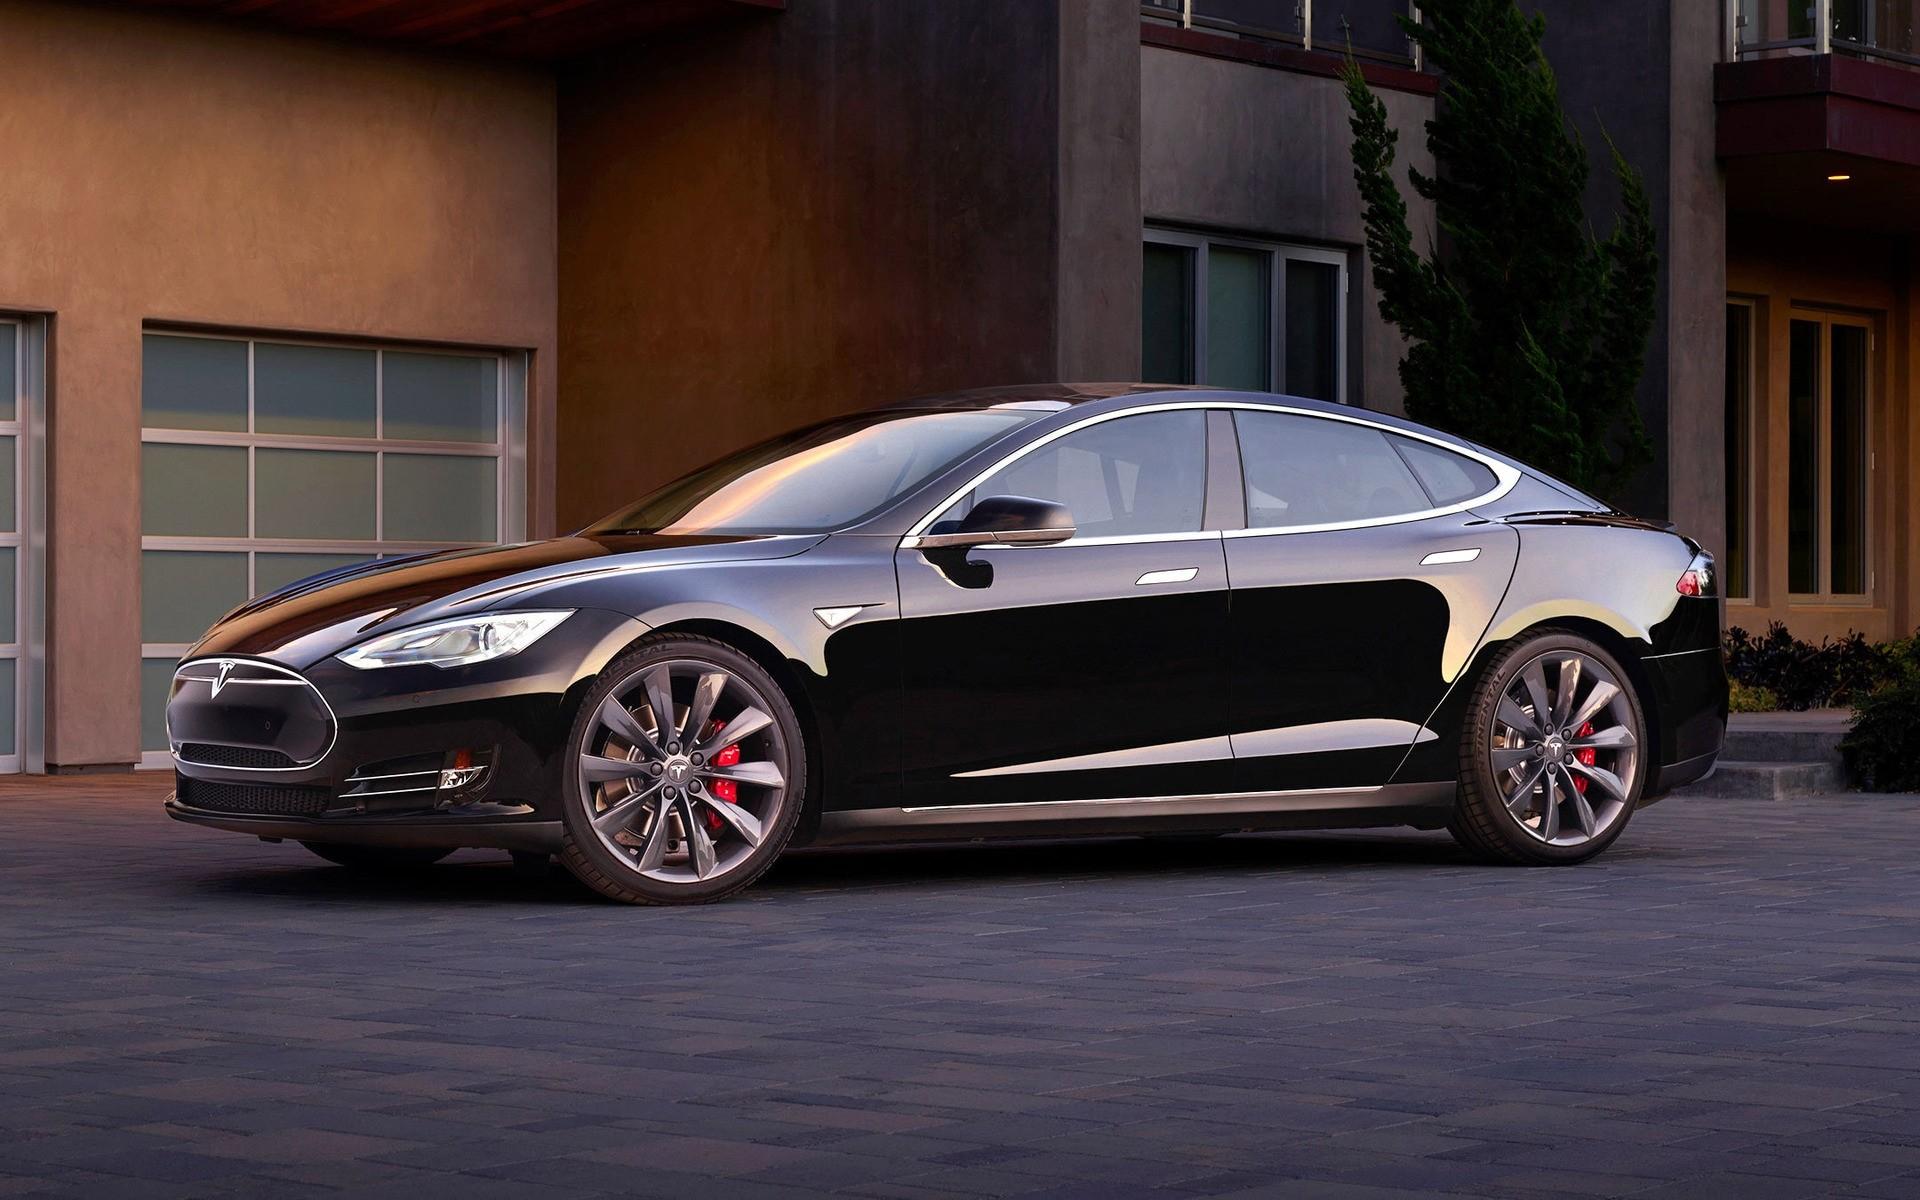 Black Tesla Model S Dual Motor. iPhone wallpaper for free